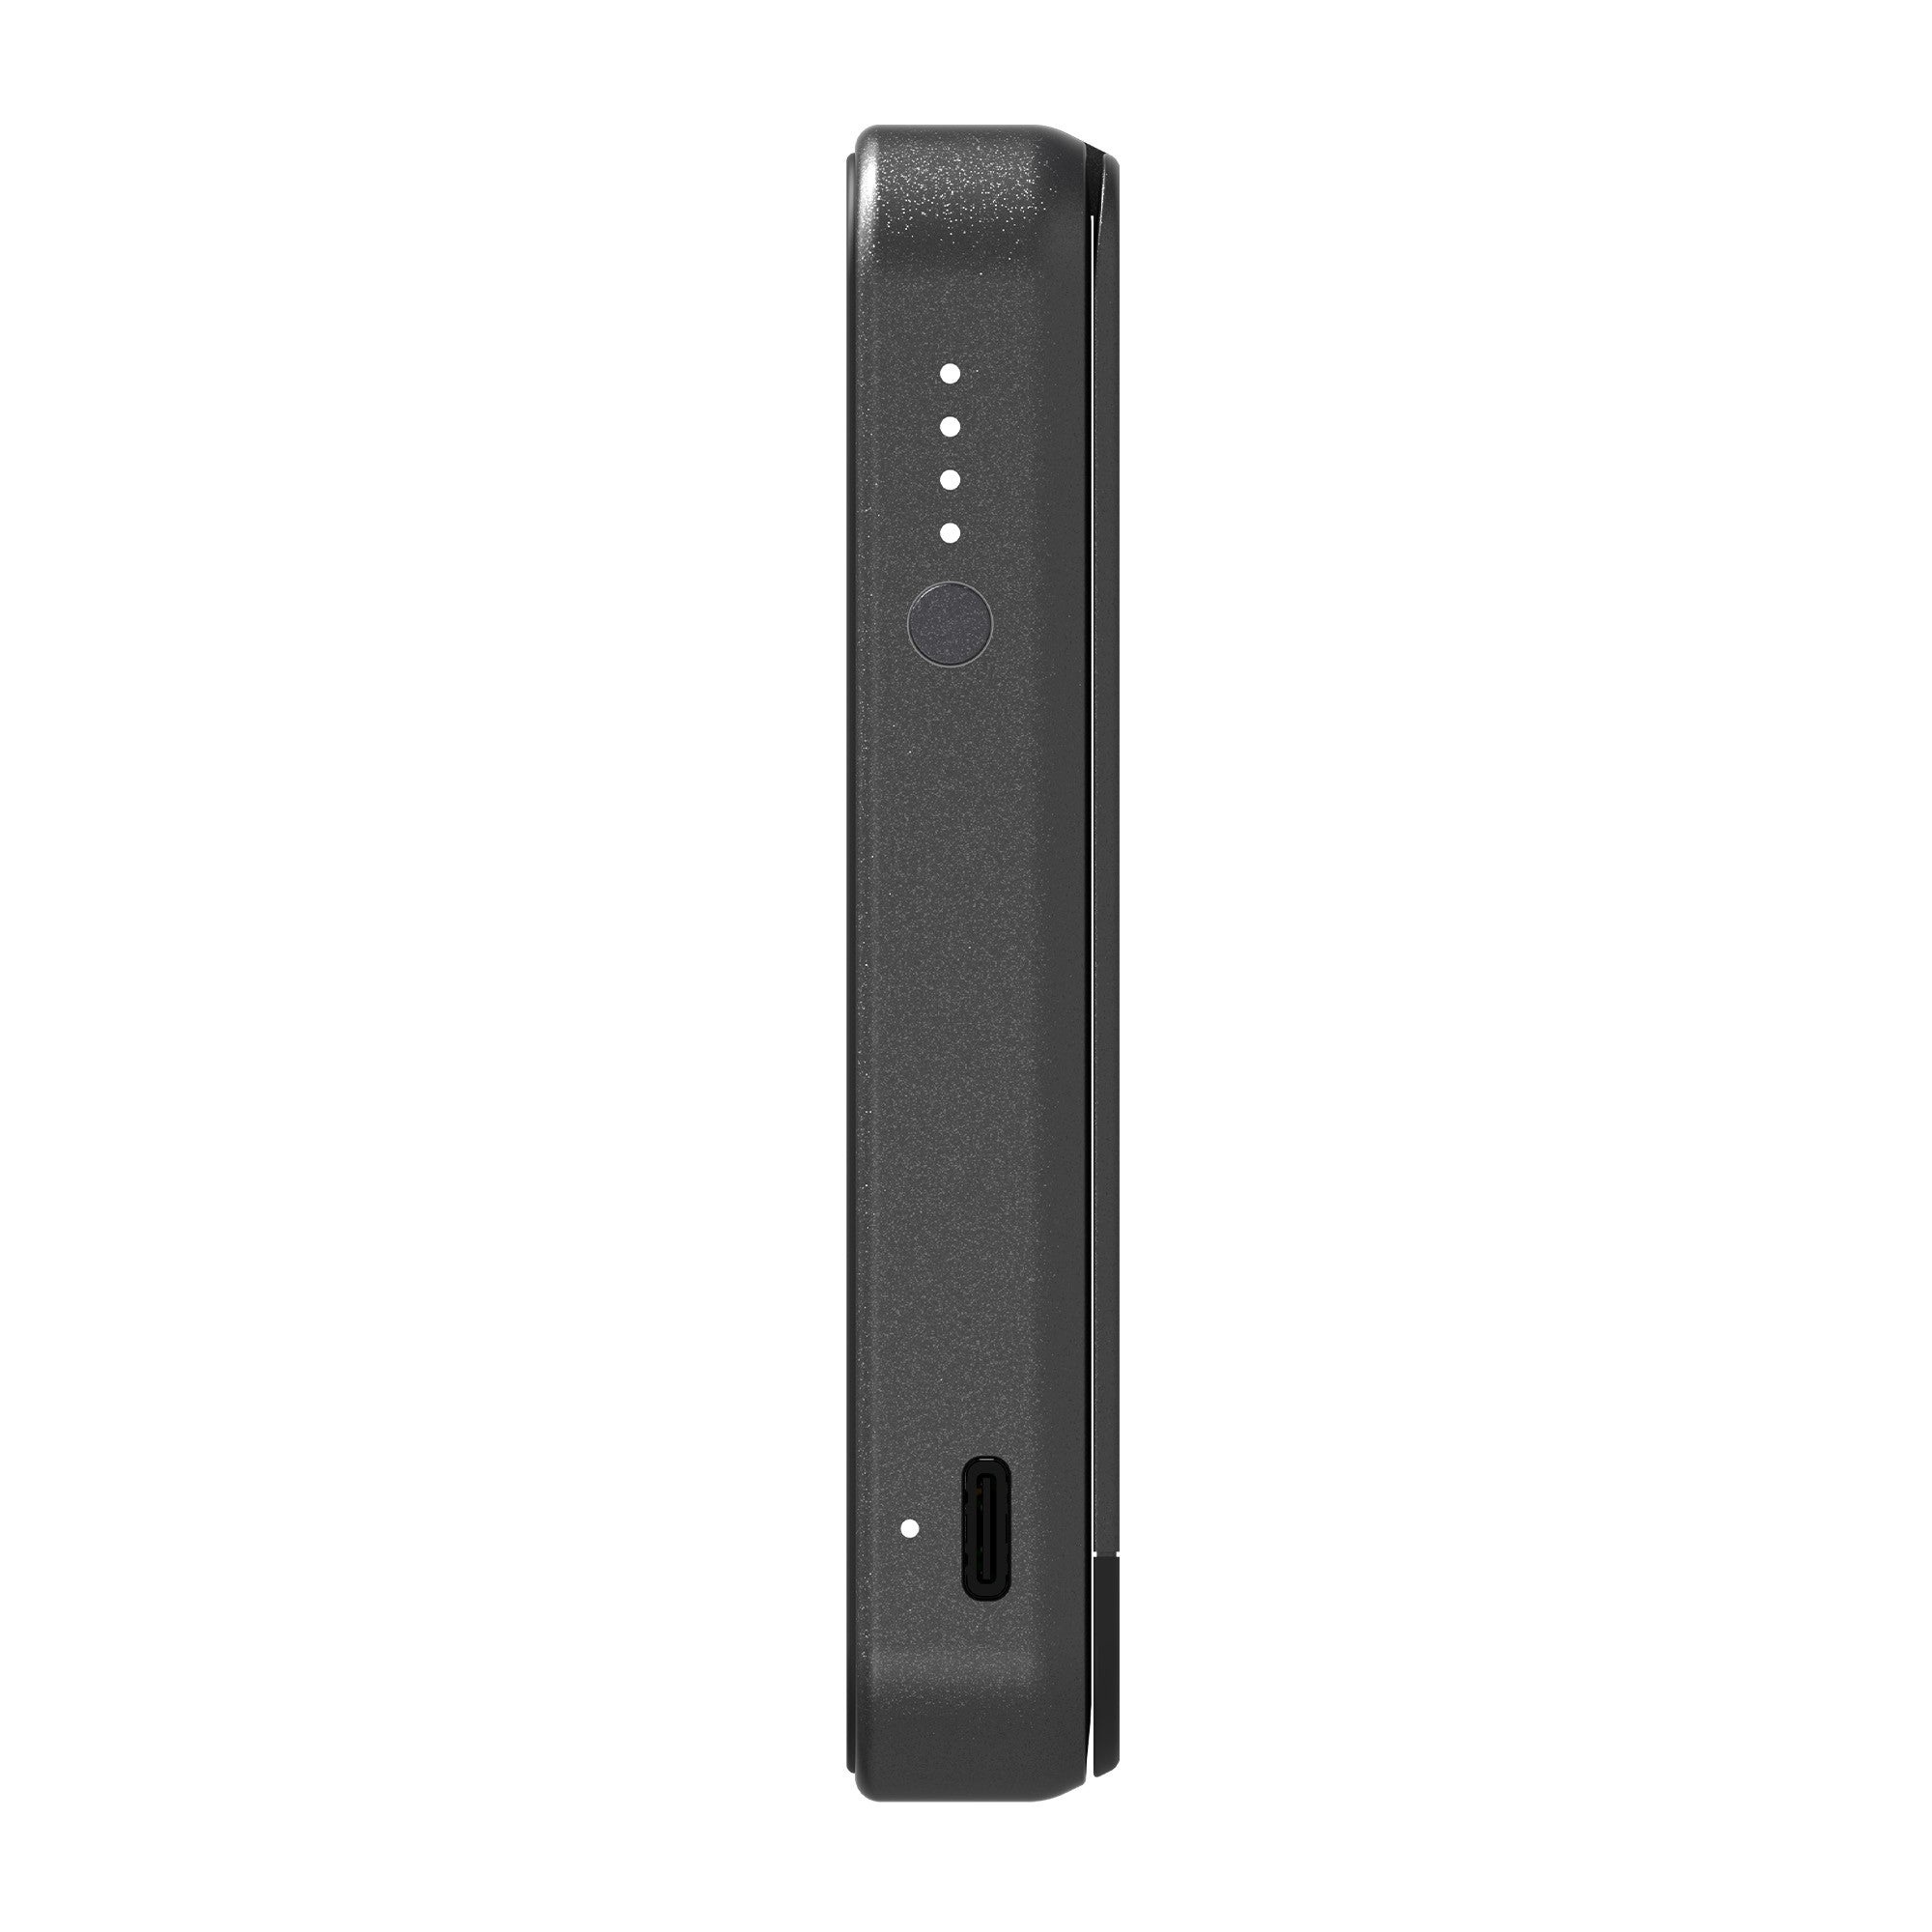 mophie universal battery snap+ 5k powerstation mini stand - black - 15-11914